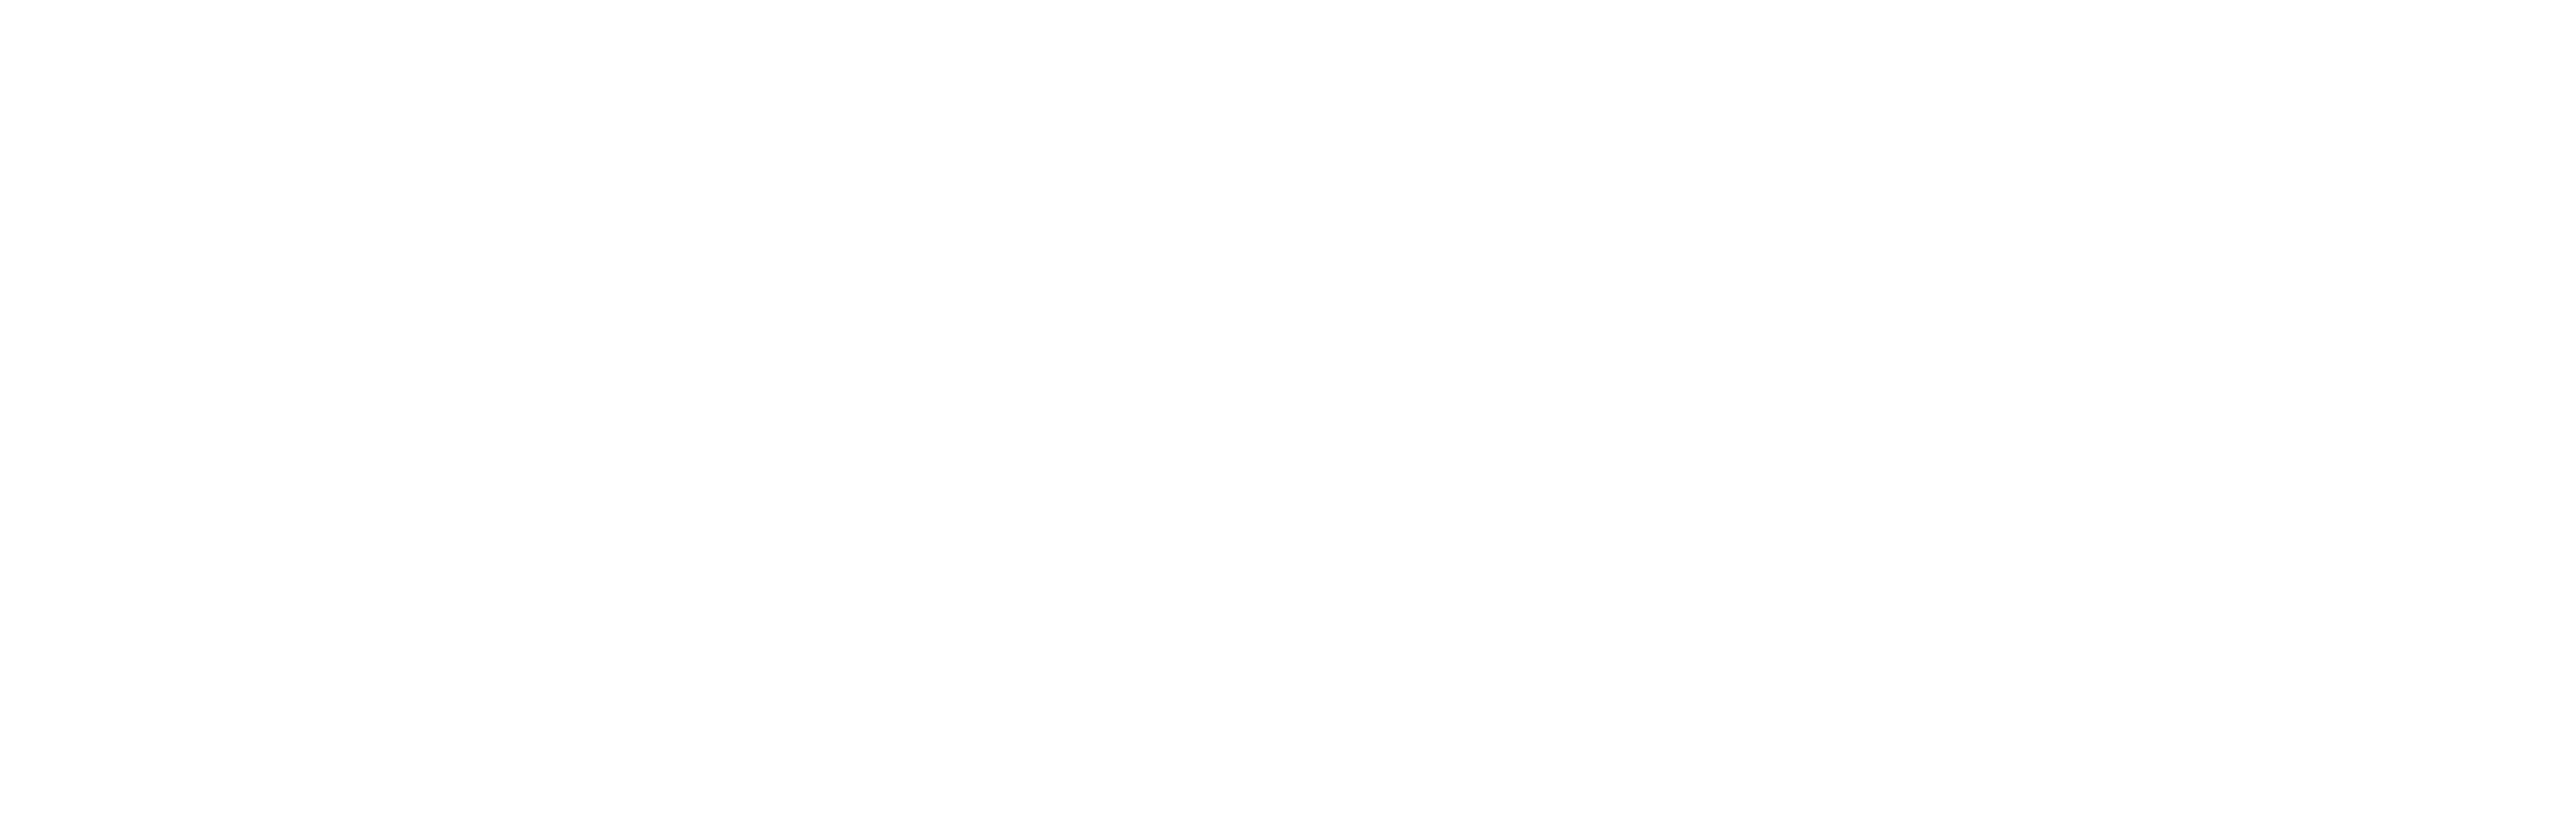 https://www.saastock.com/wp-content/uploads/2020/08/aws-logo.png